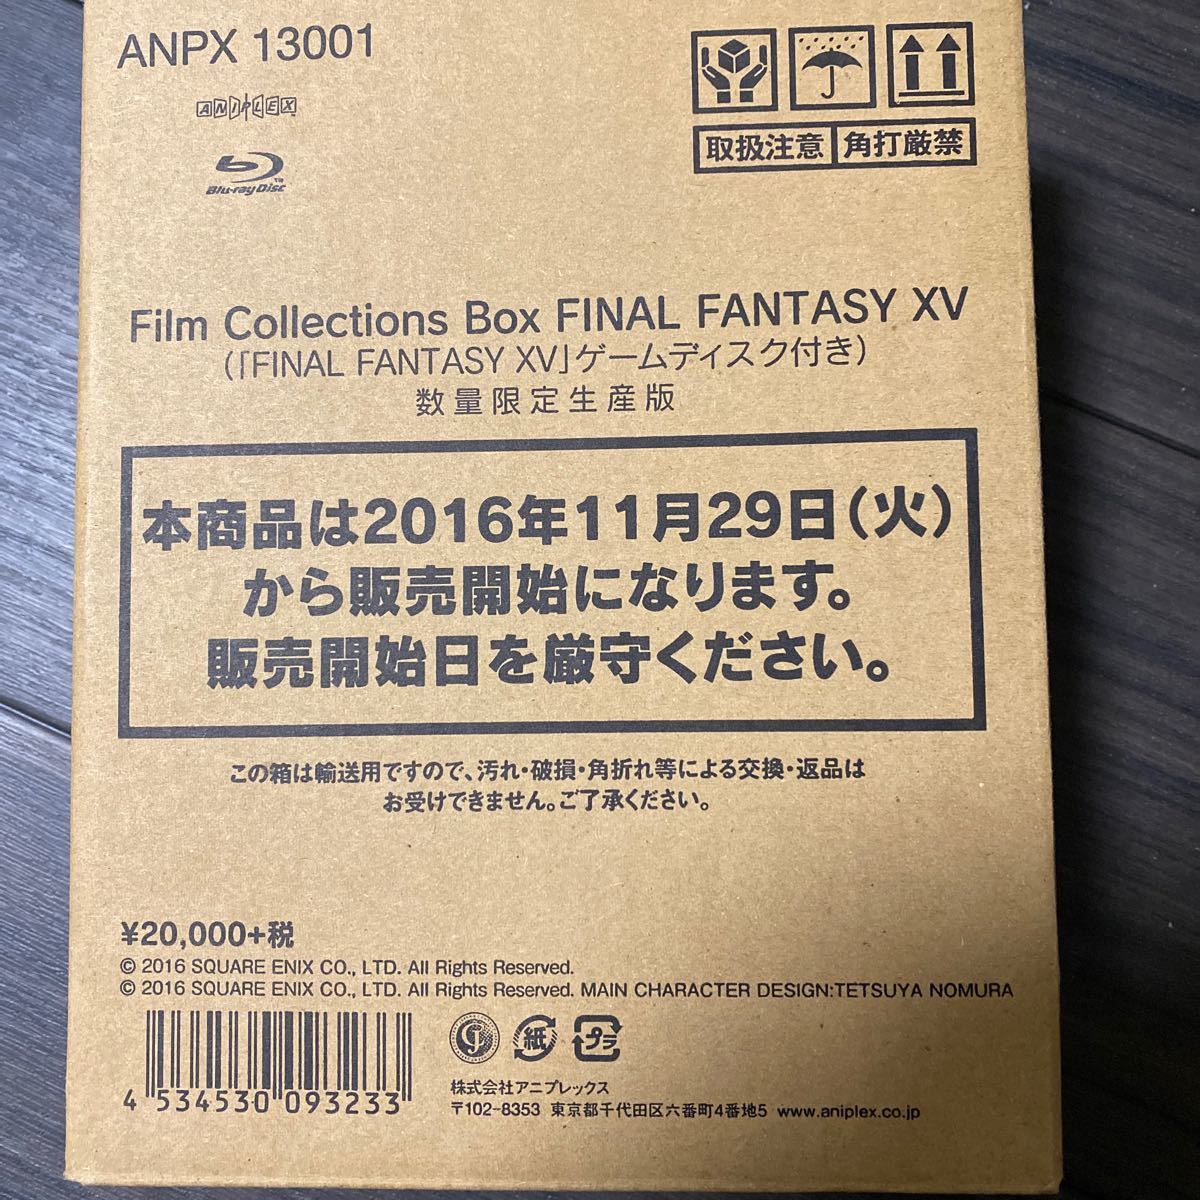 Film Collections Box FINAL FANTASY XV